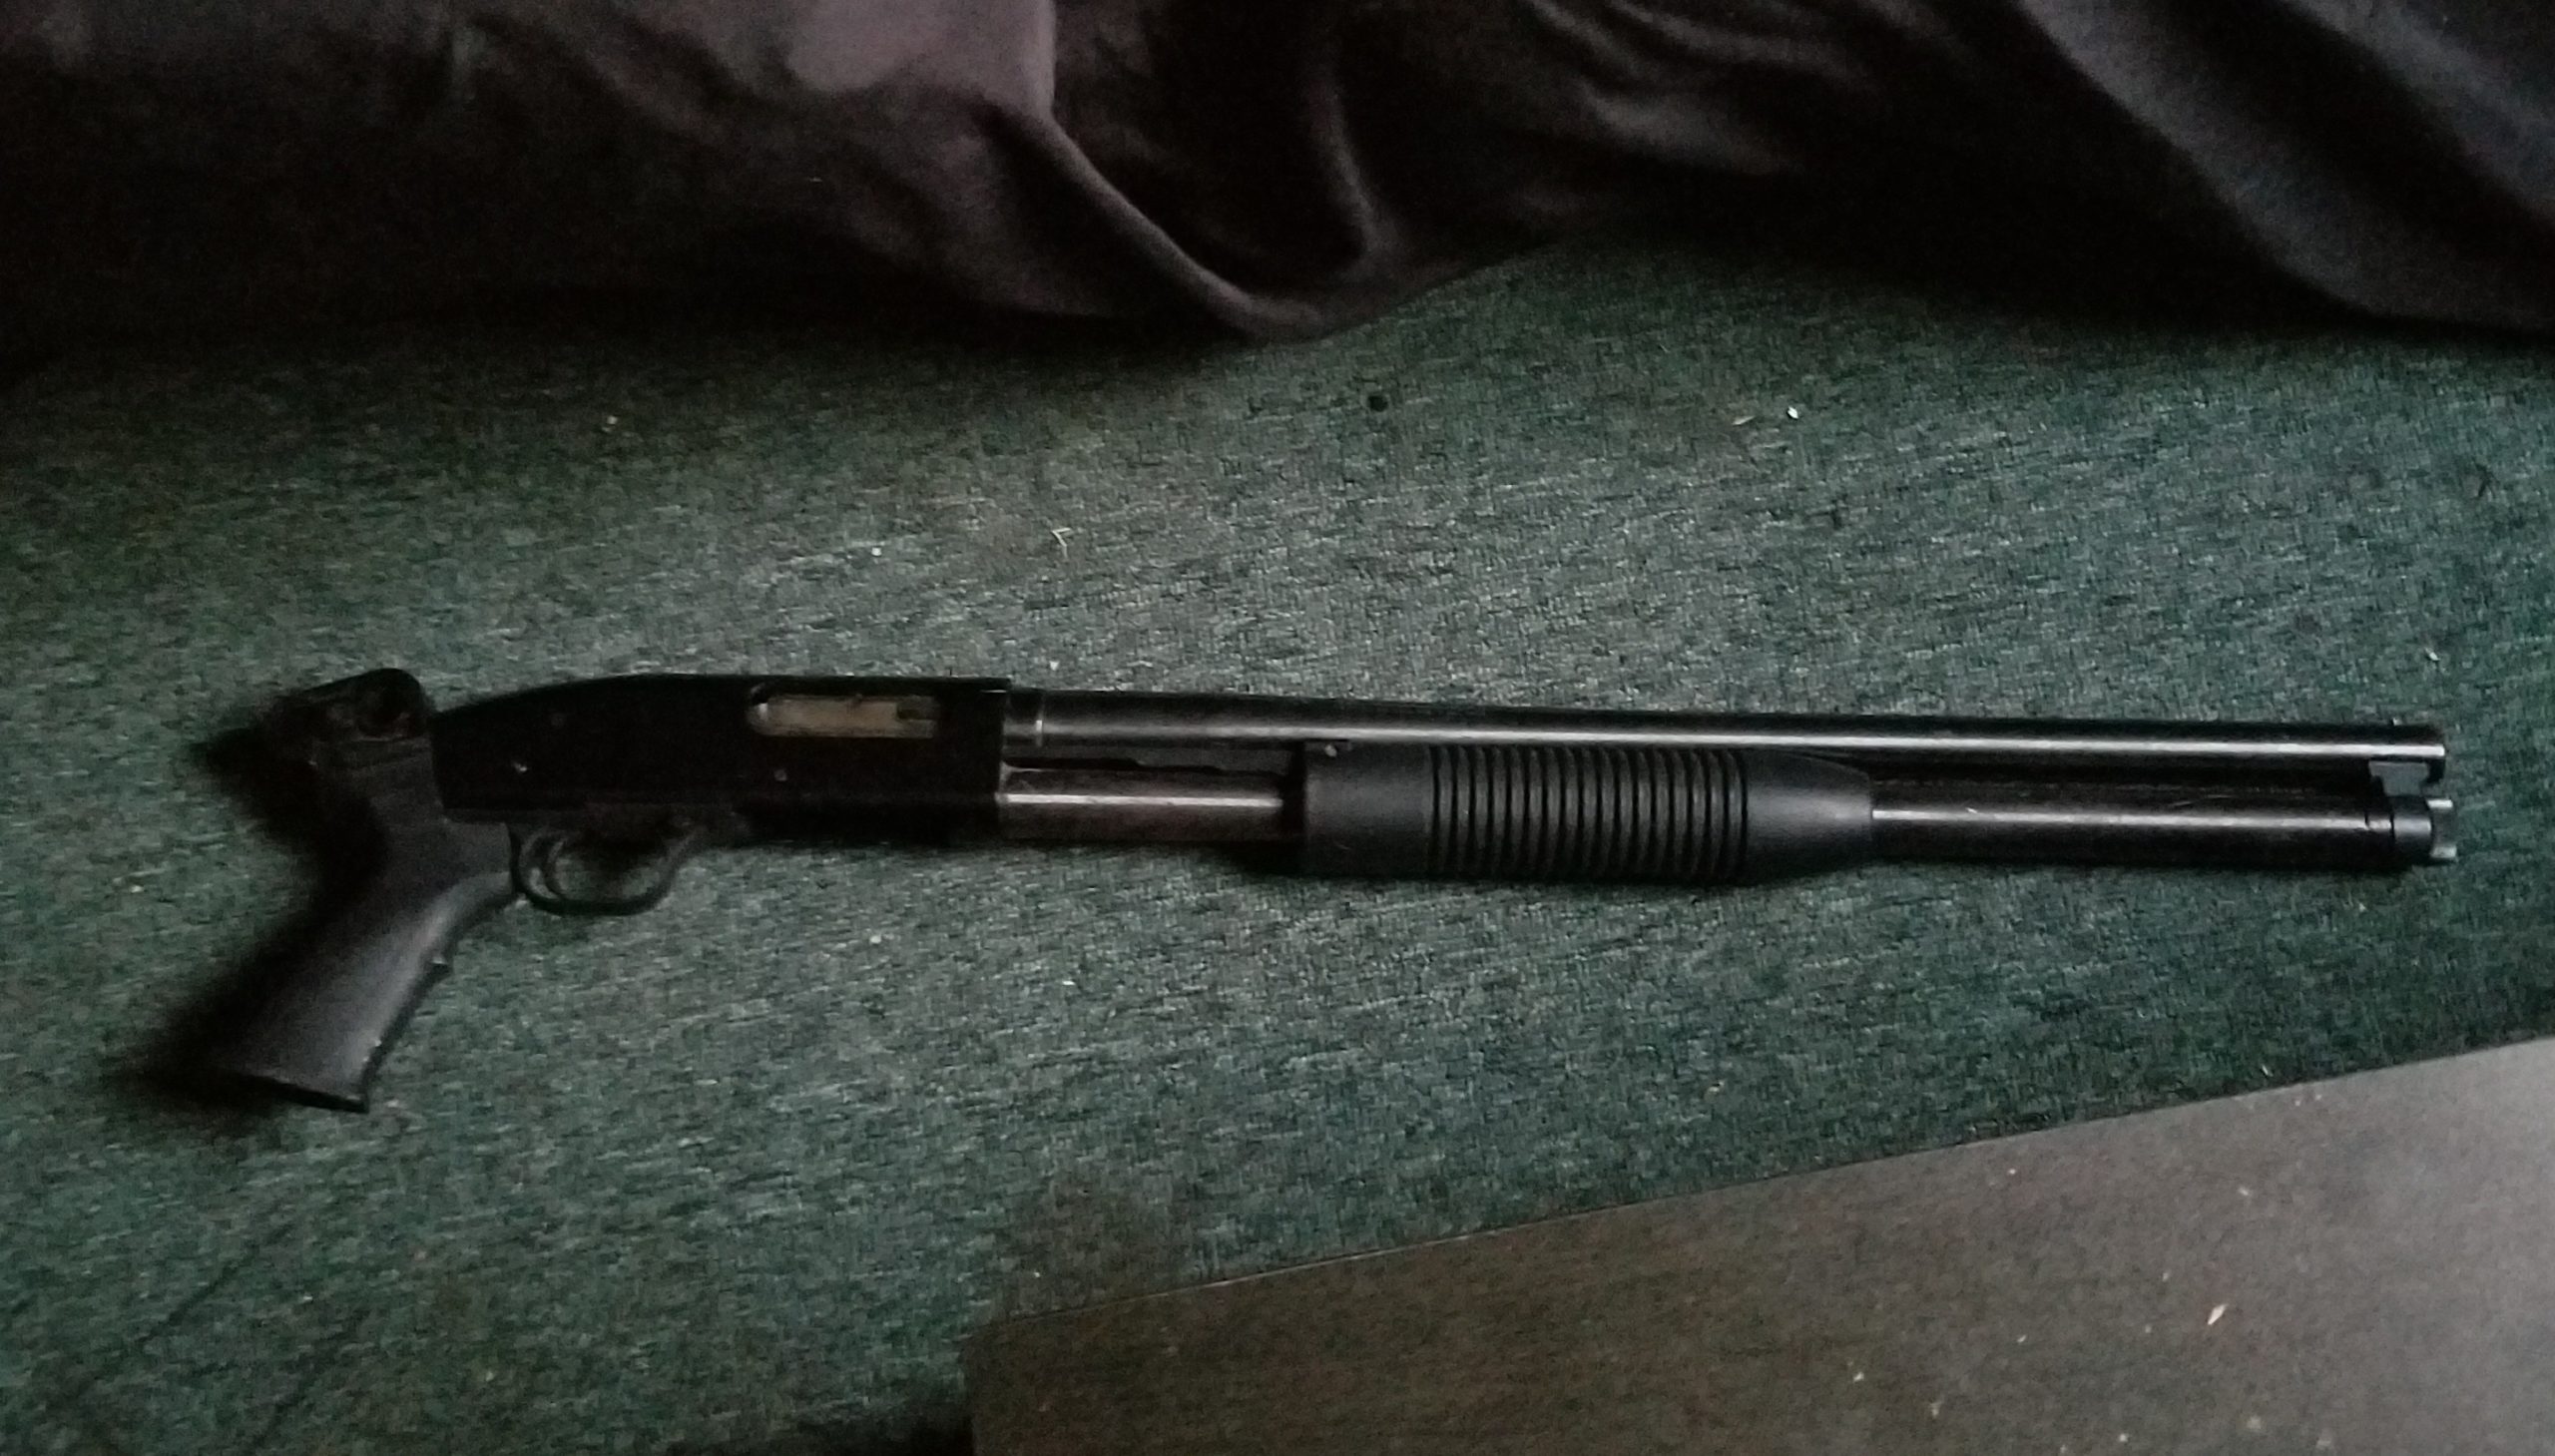 Loaded sawed-off shotgun seized from suspected drug trafficker